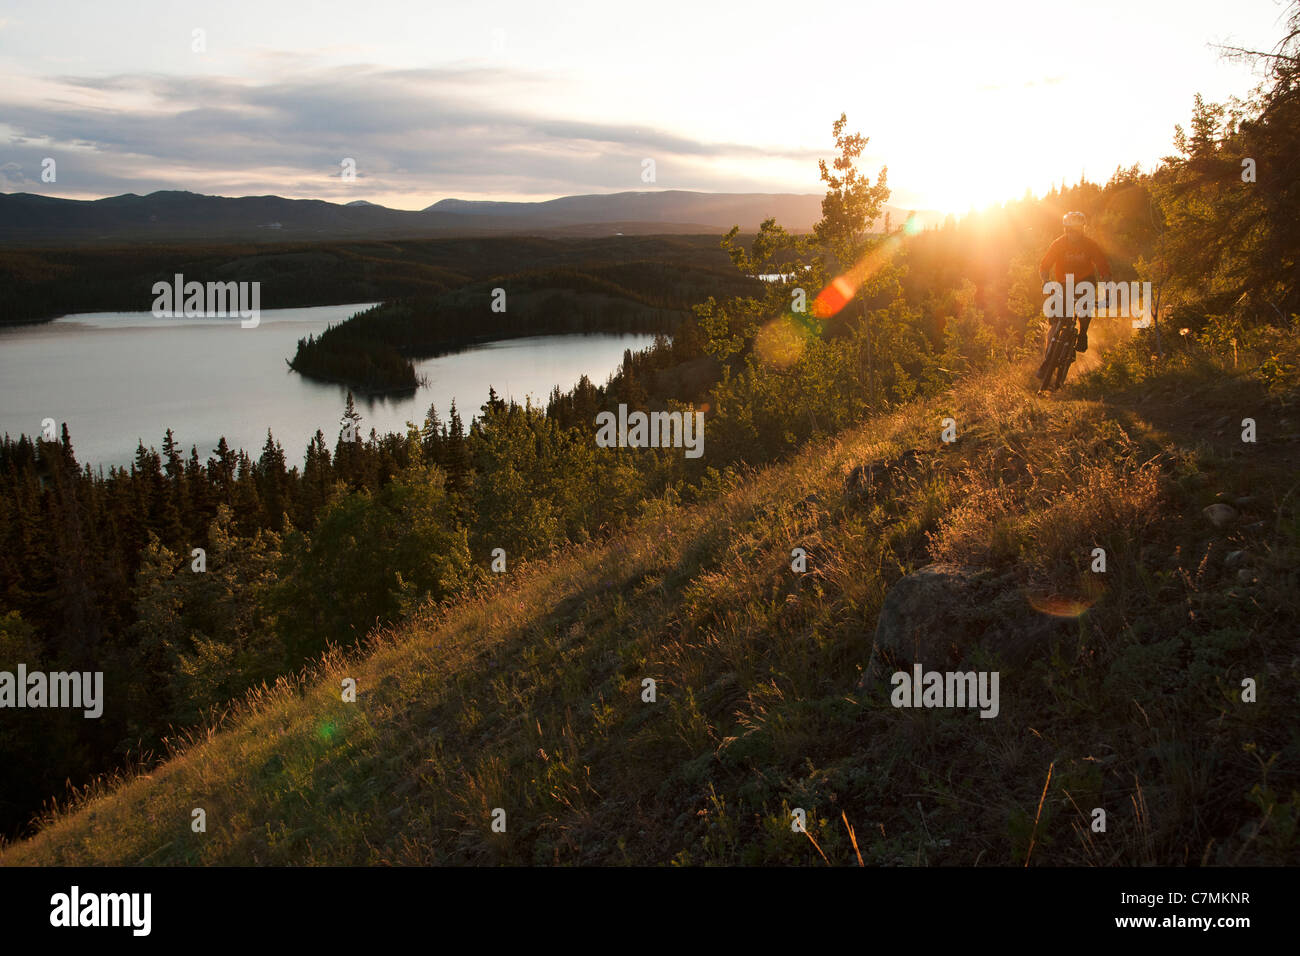 A mountain biker rides a trail under the midnight sun in Whitehorse, Yukon Territory, Canada Stock Photo